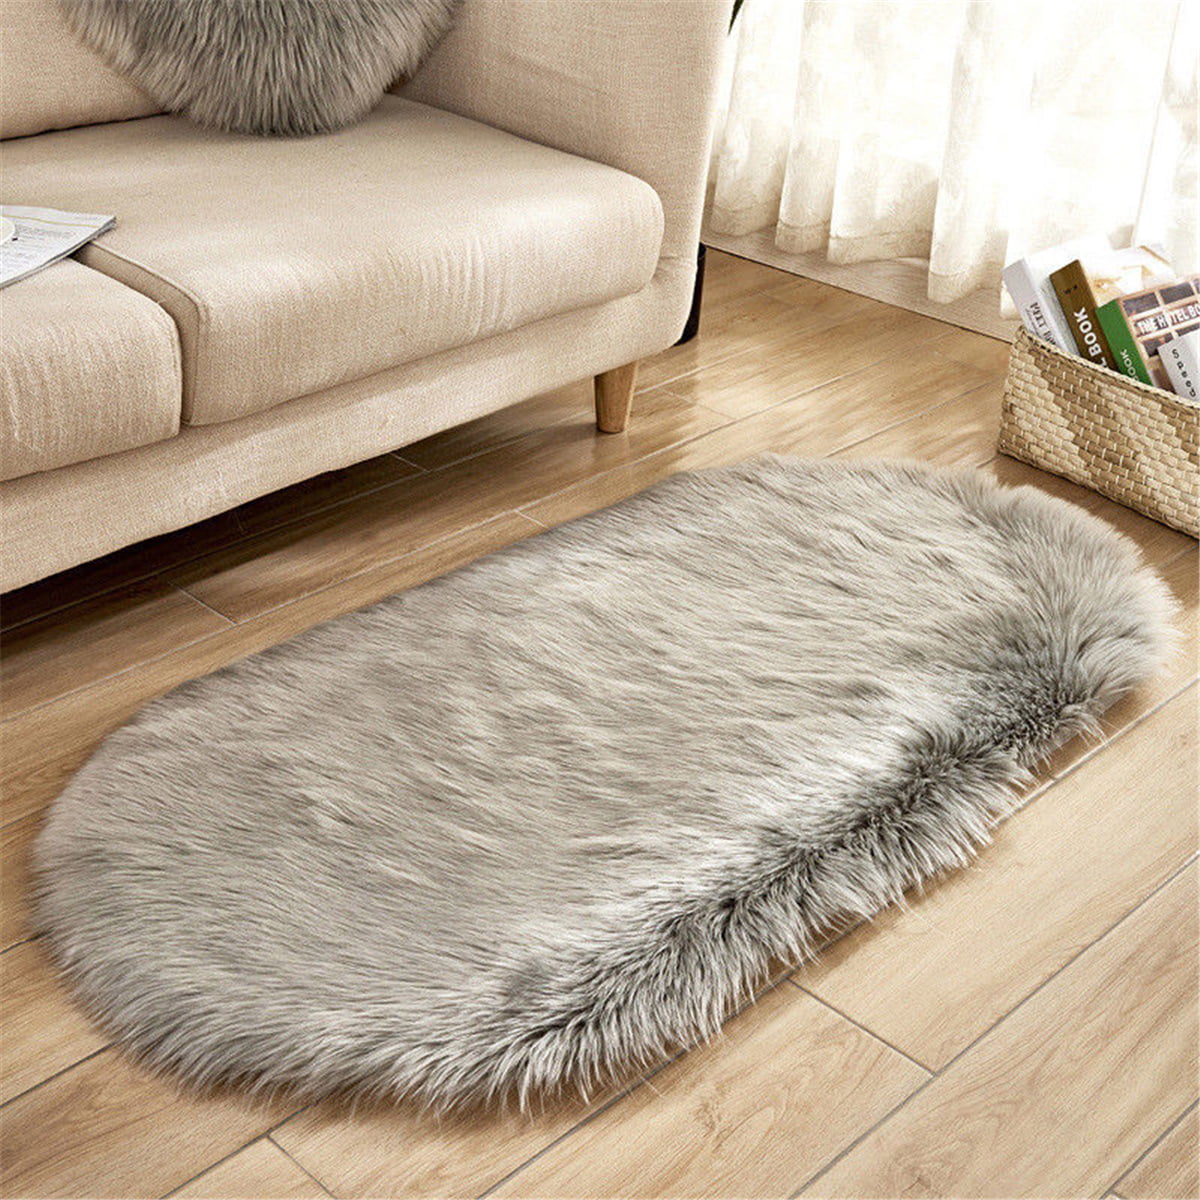 Faux fur Sheepskin Fluffy Rugs Anti-Skid Shaggy Area Rugs Carpet Mats 40x40cm